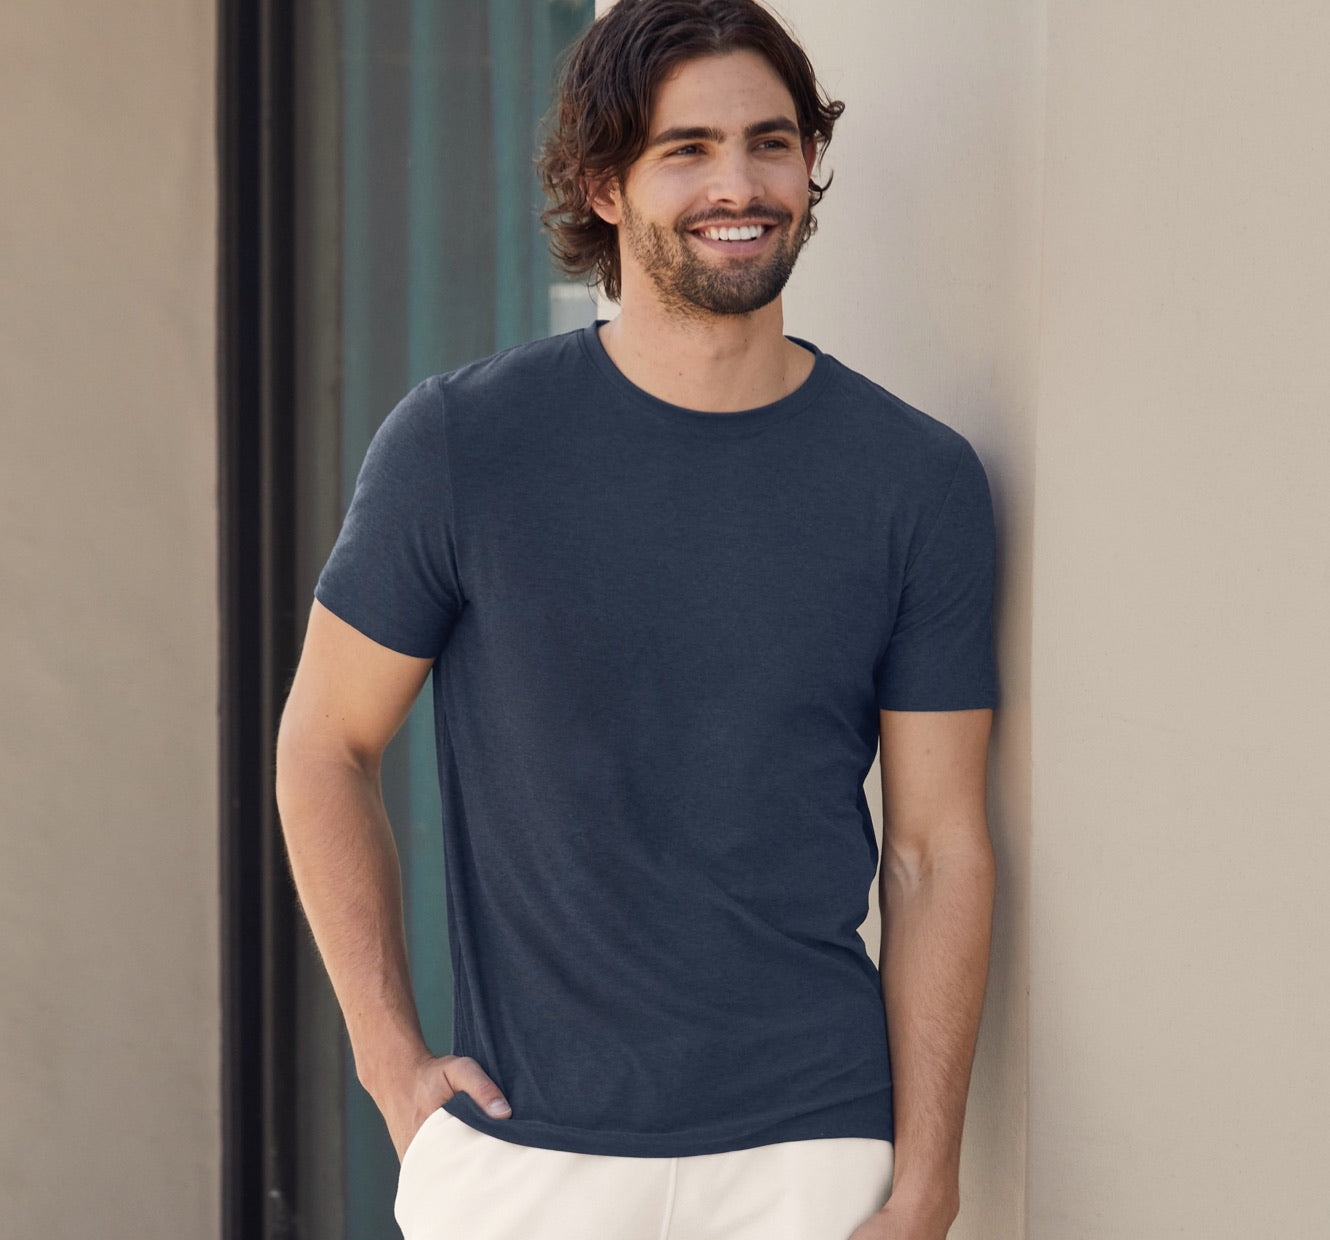 Men's Cotton Fleece Hooded Sweatshirt - All In Motion™ Heathered Light Gray  M : Target